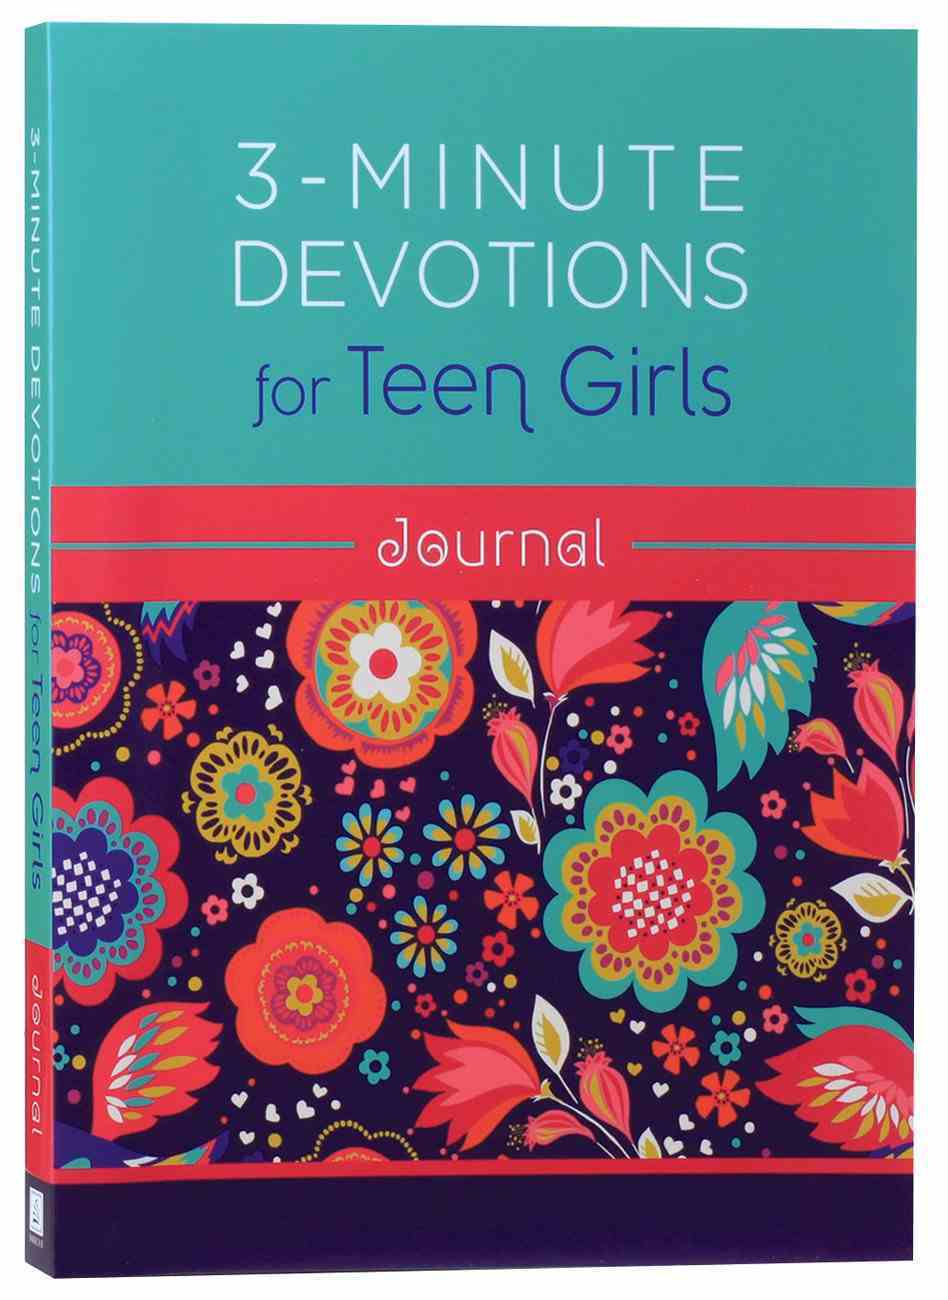 3-Minute Devotions For Teen Girls Journal (3 Minute Devotions Series) Spiral